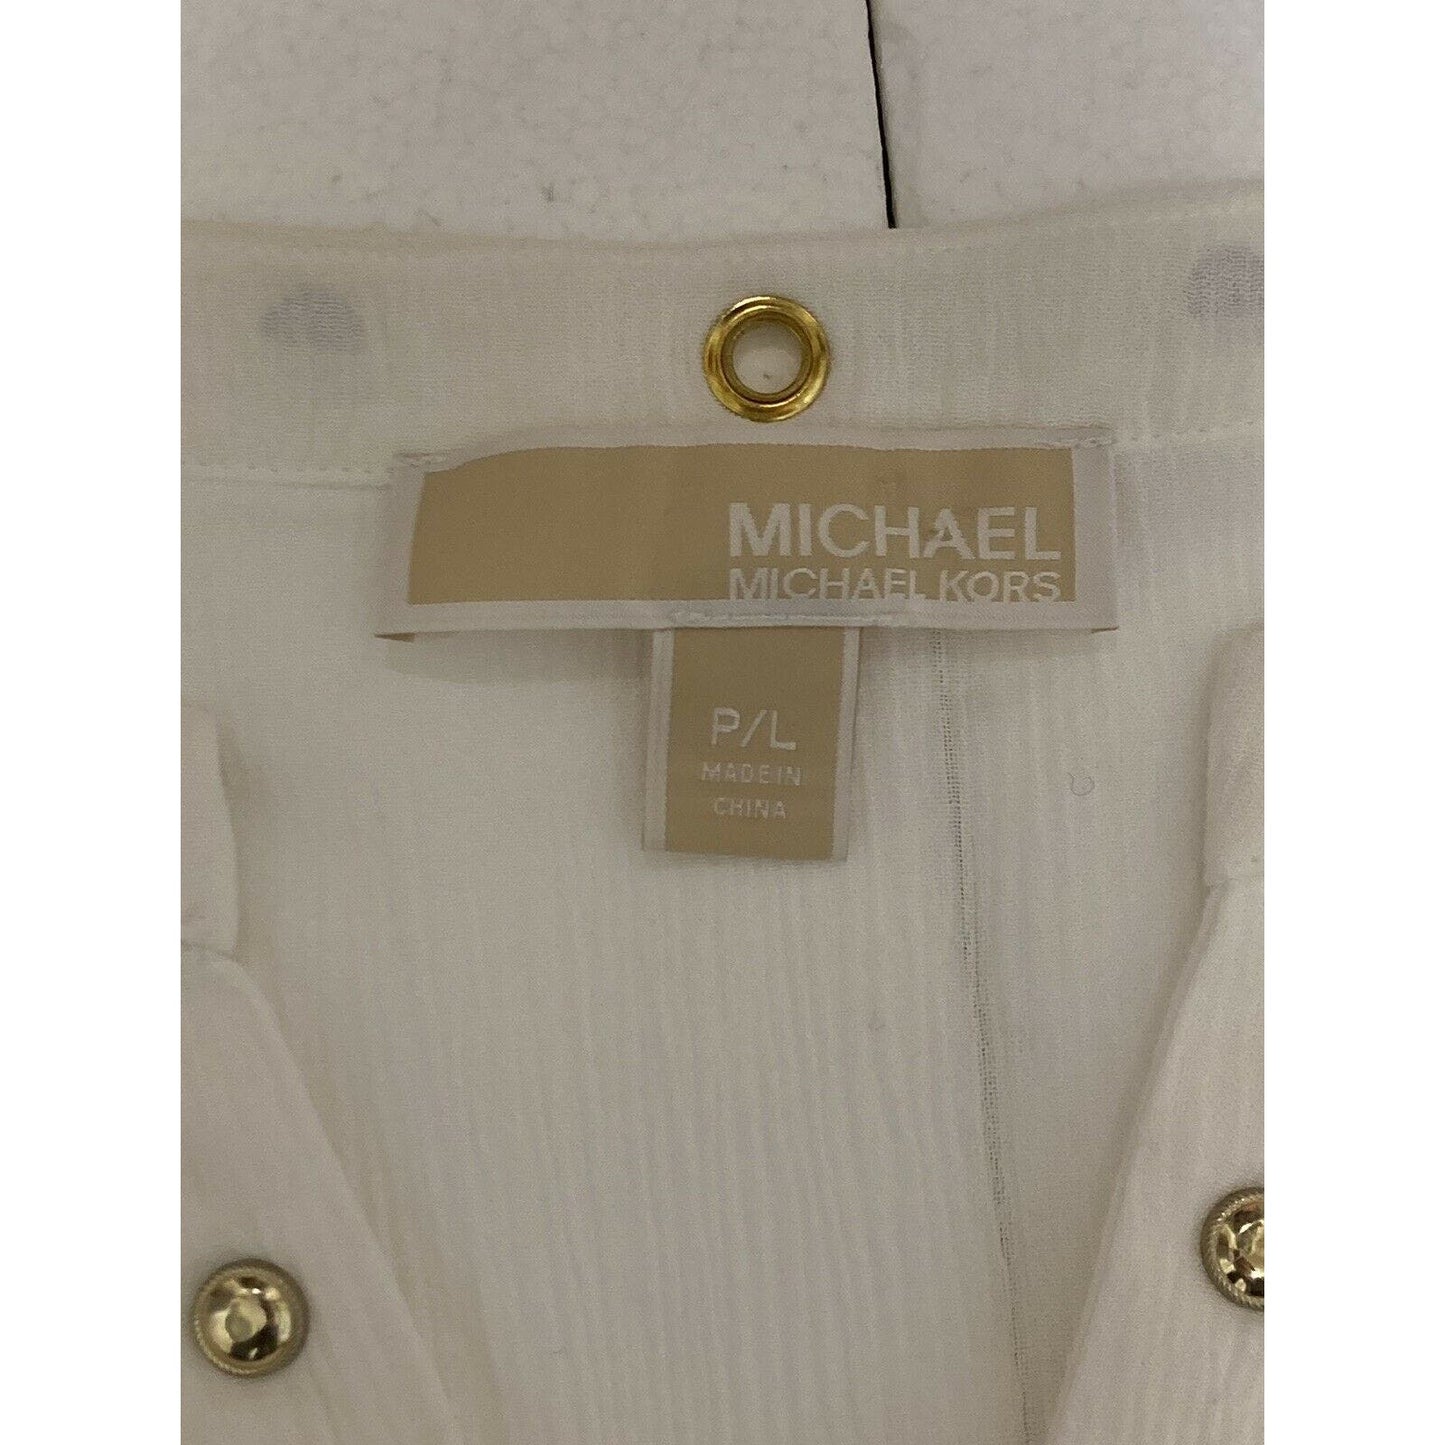 MICHAEL Michael Kors White Lace Up Long Sleeve Blouse Size Petite Large PL